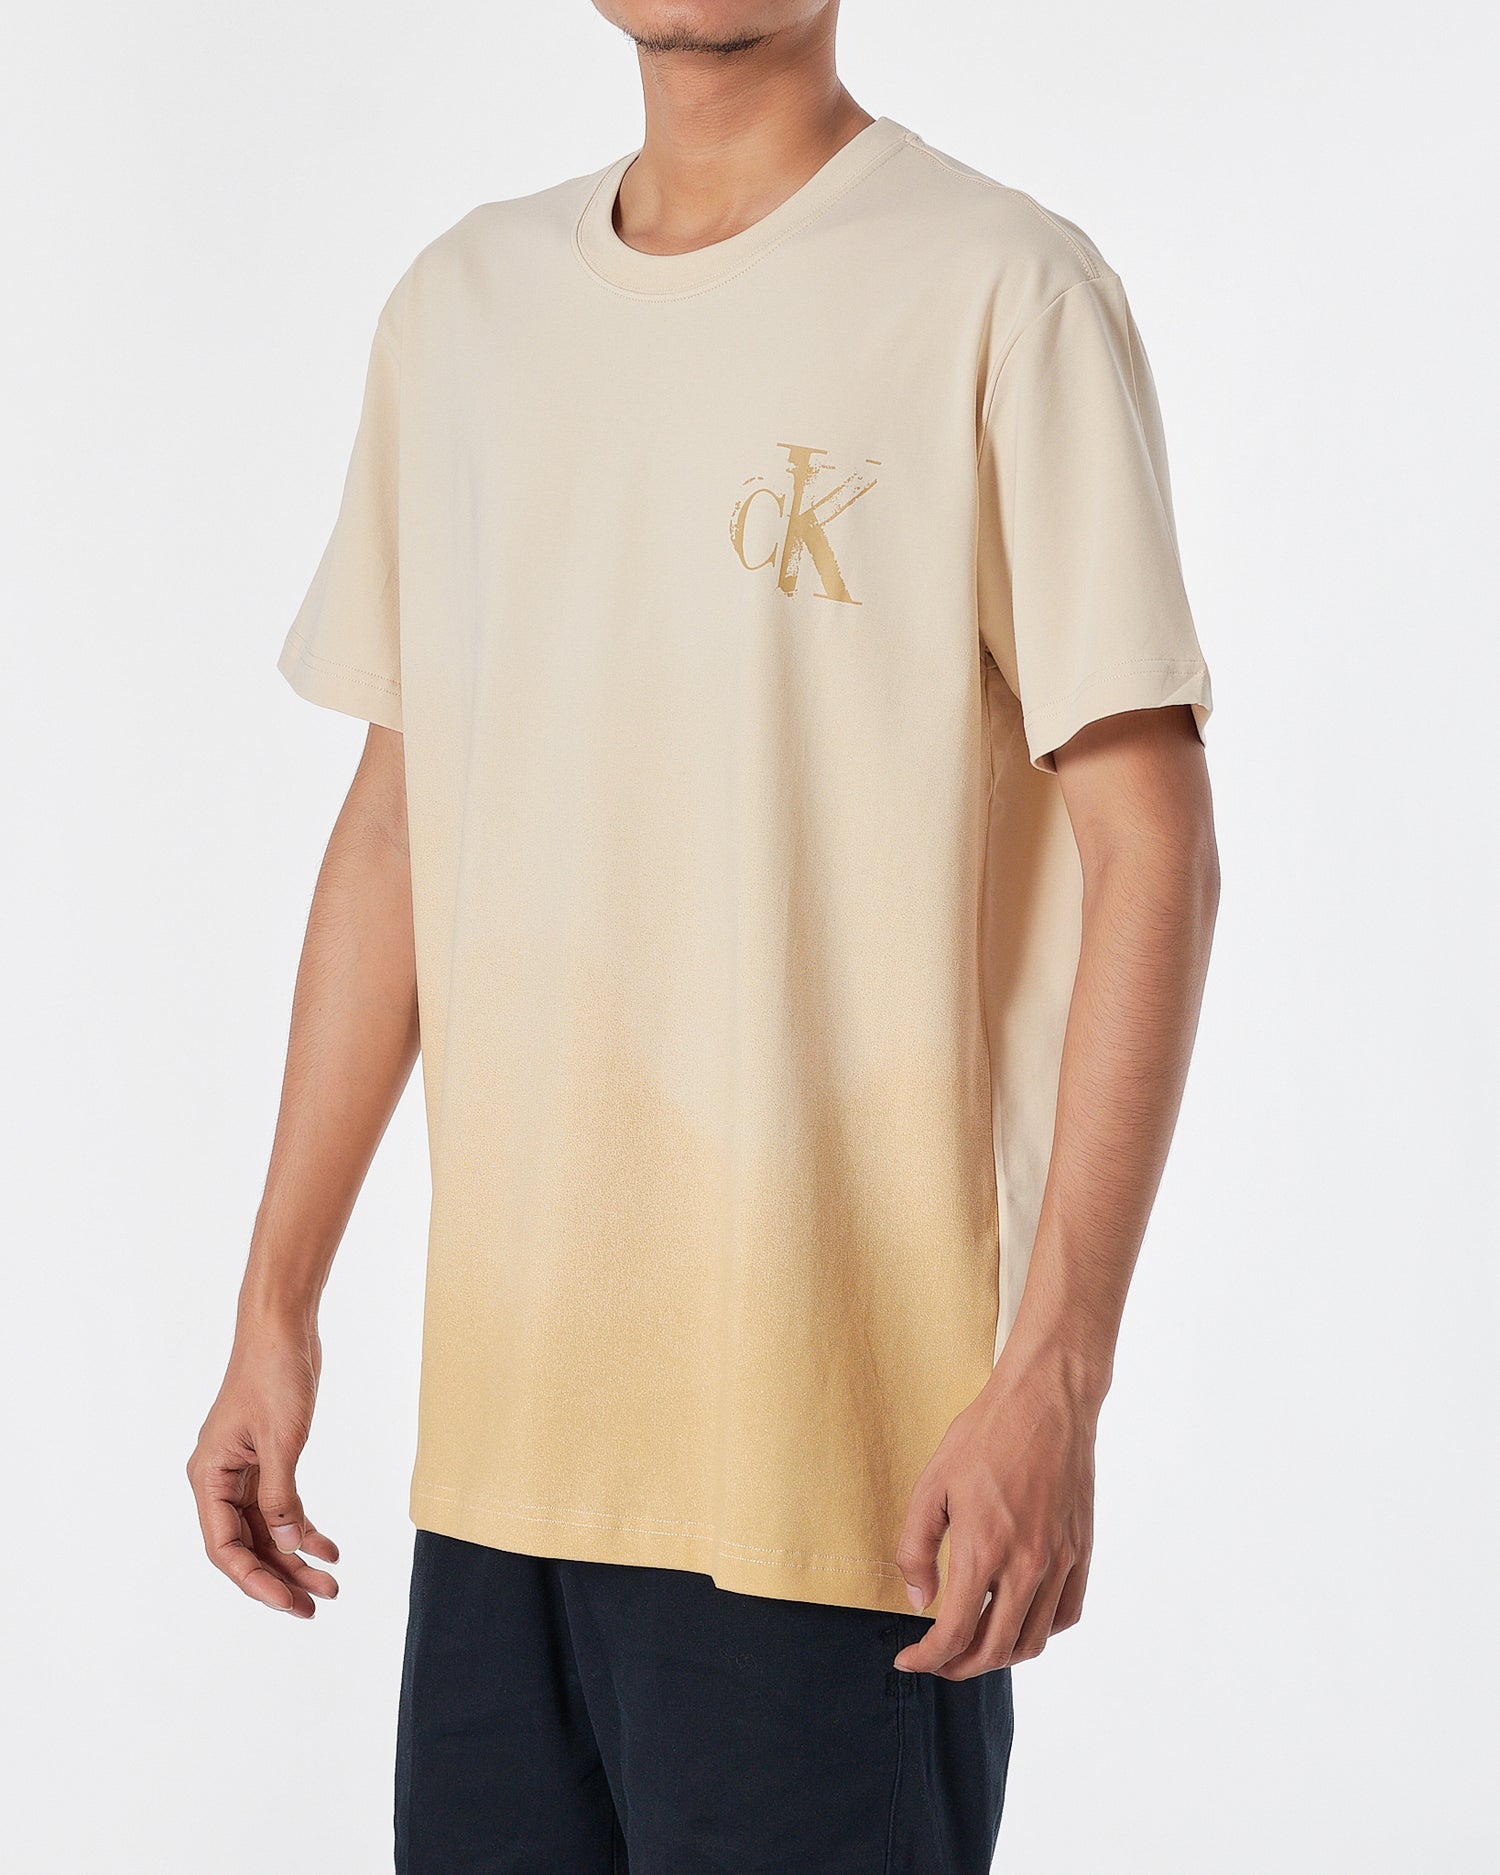 CK Gradient Color Men Cream T-Shirt 14.90